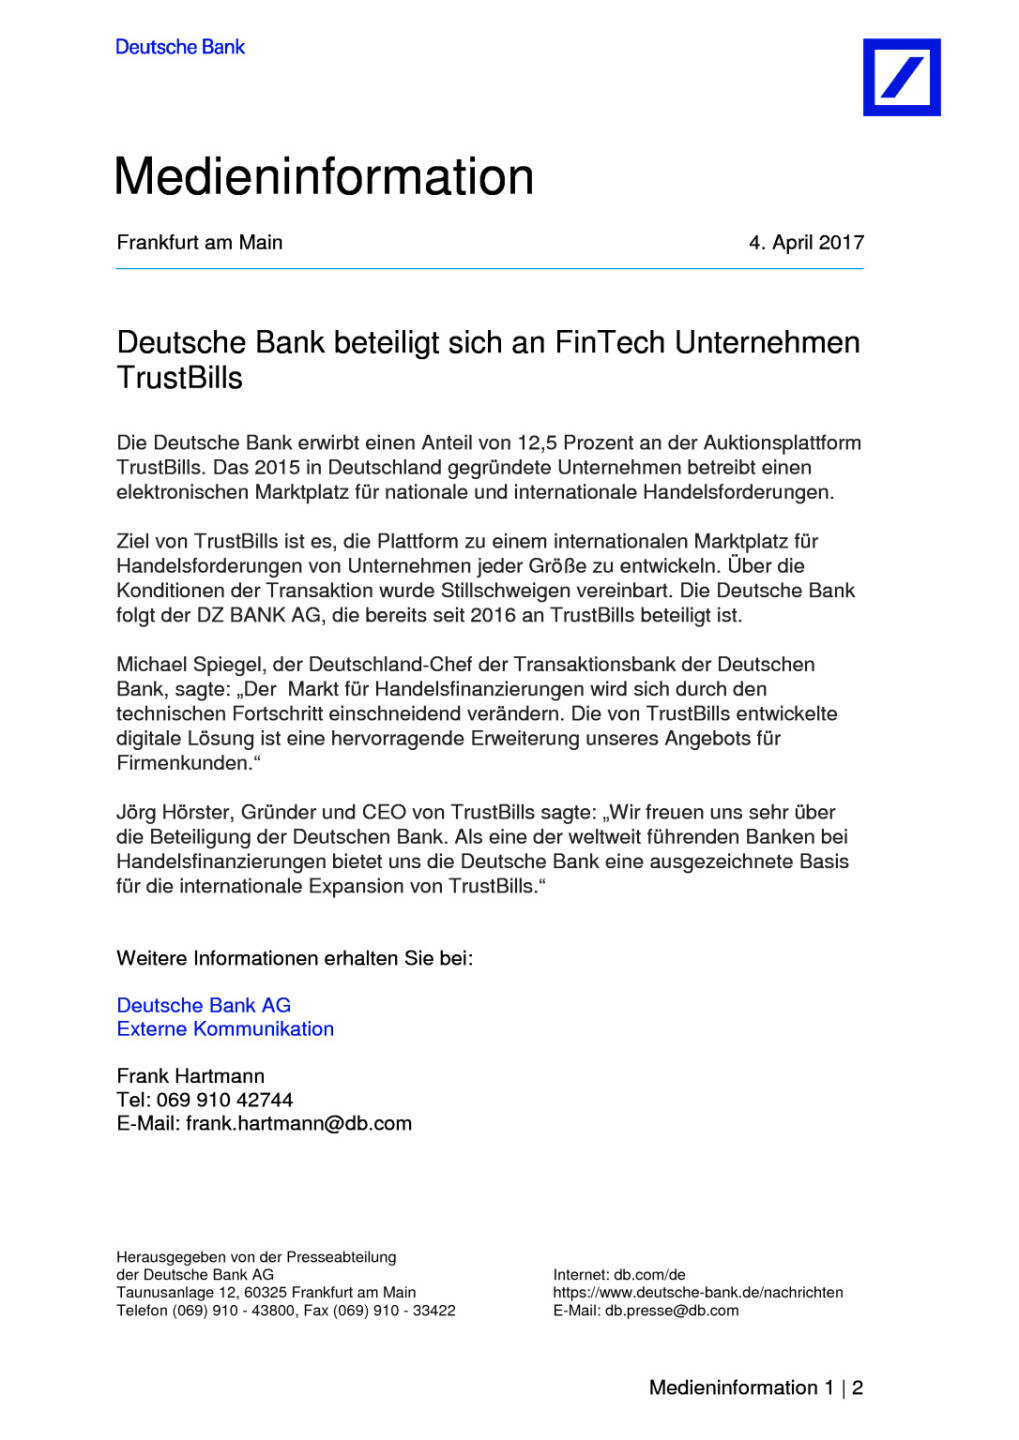 Deutsche Bank beteiligt sich an FinTech Unternehmen TrustBills, Seite 1/2, komplettes Dokument unter http://boerse-social.com/static/uploads/file_2196_deutsche_bank_beteiligt_sich_an_fintech_unternehmen_trustbills.pdf